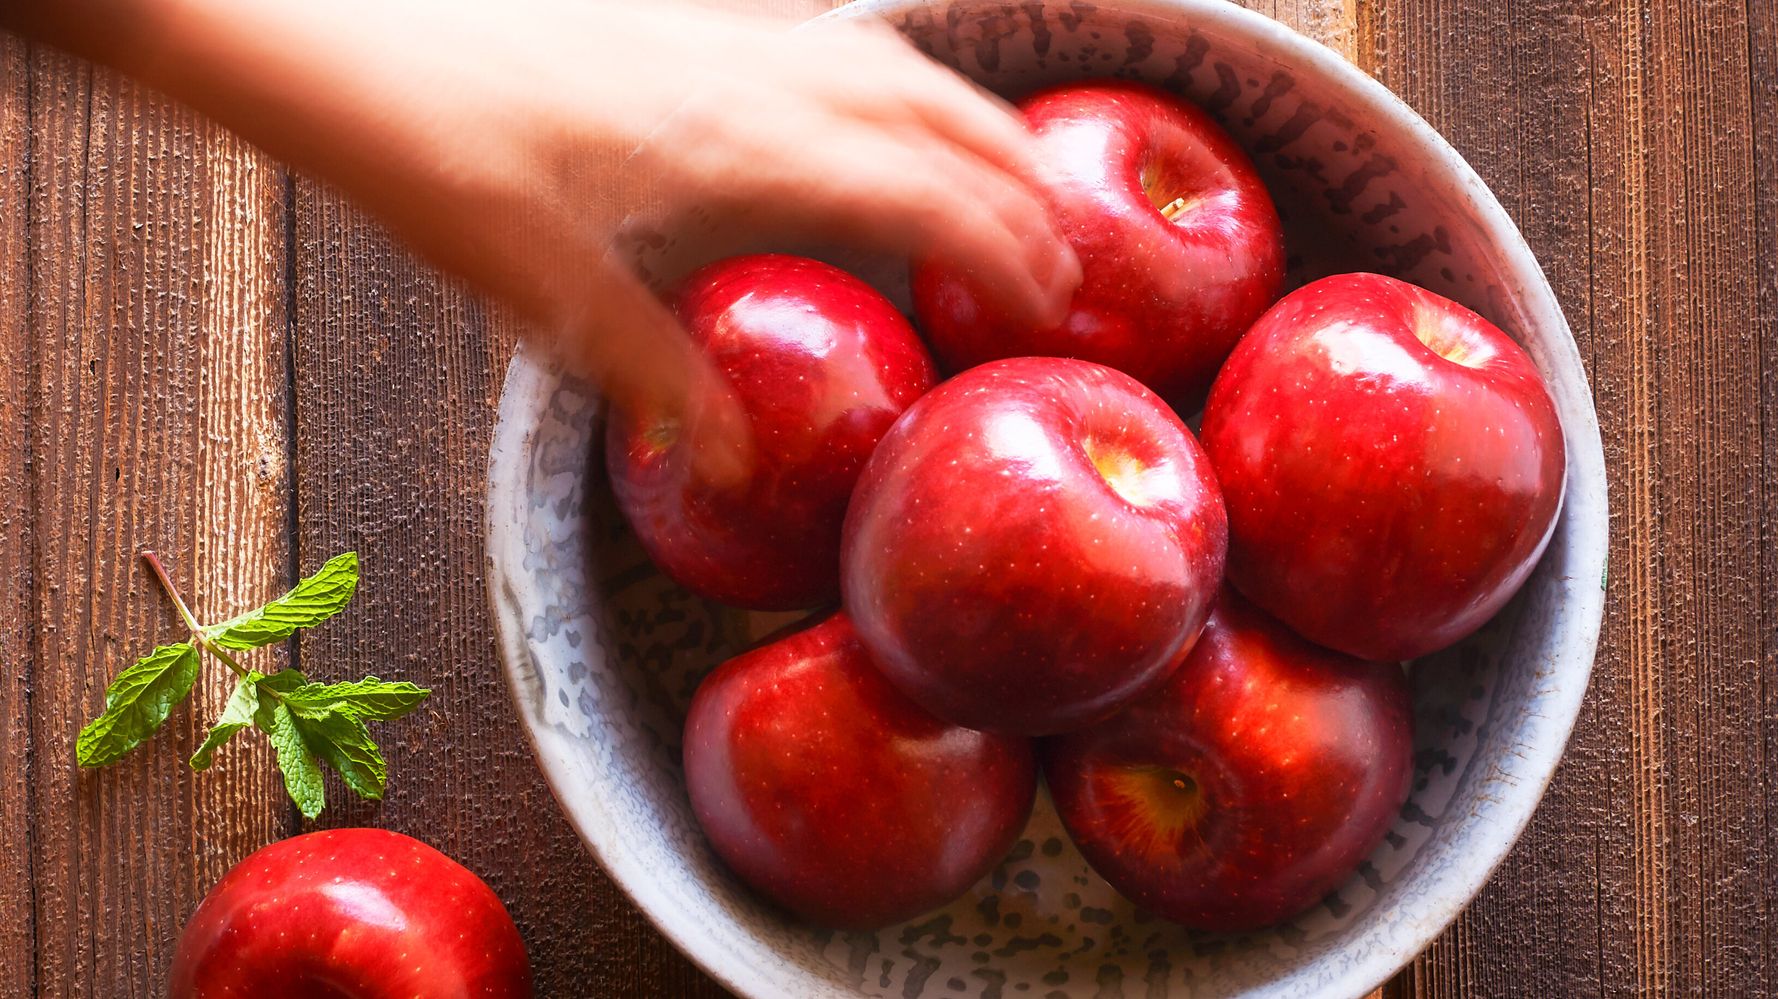 Get Ready for Cosmic Crisp Apples - #220 by JCT - General Fruit